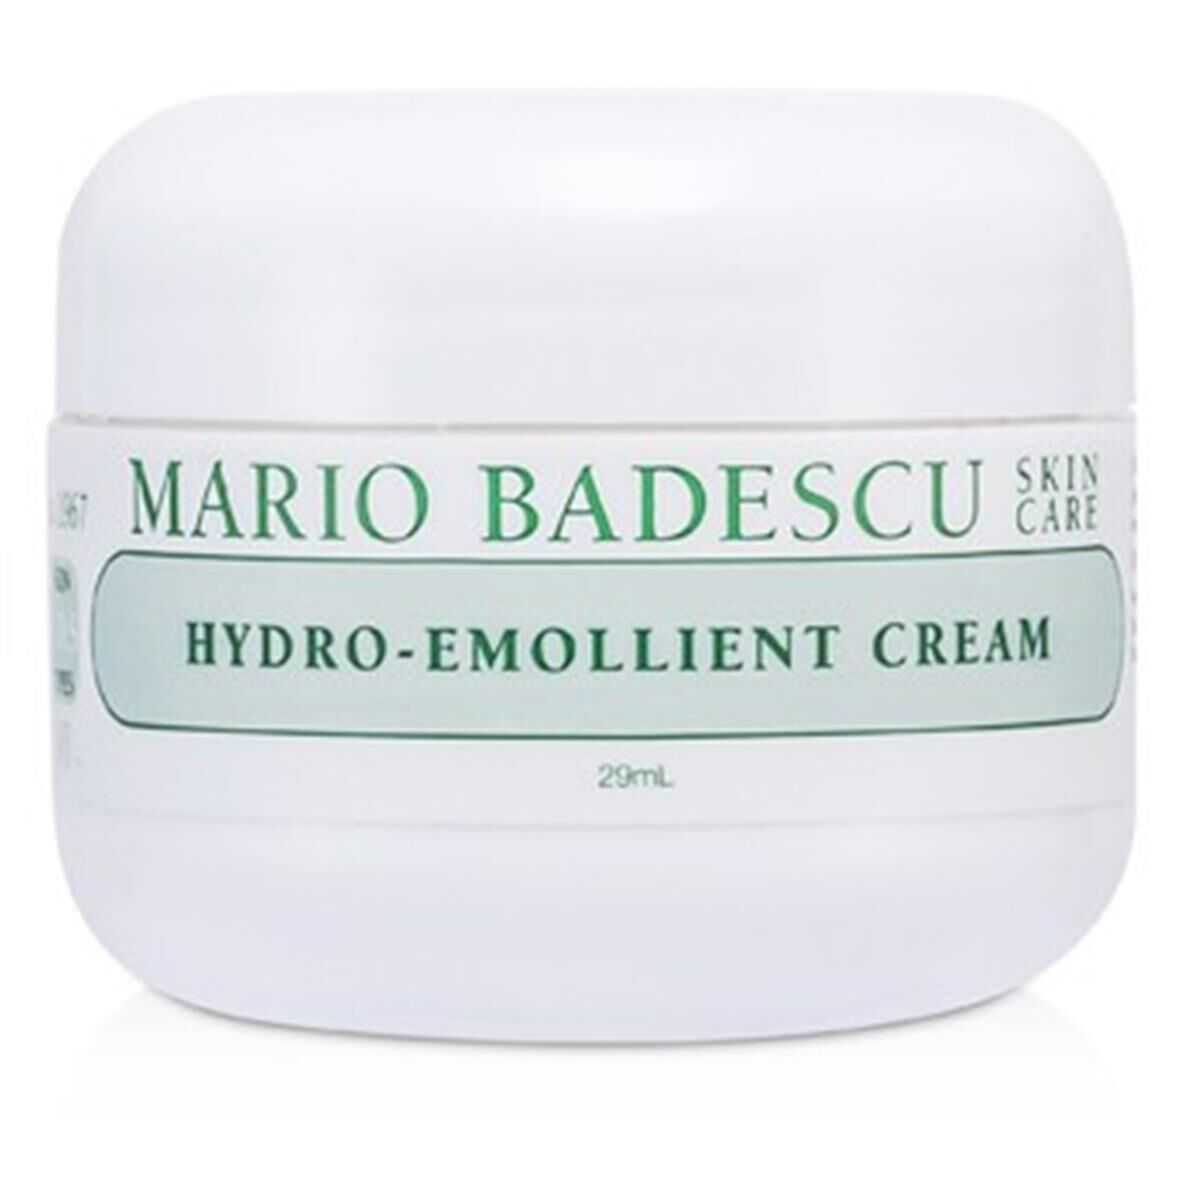 Mario Badescu 177170 Hydro Emollient Cream, 29 ml-1 oz One Size